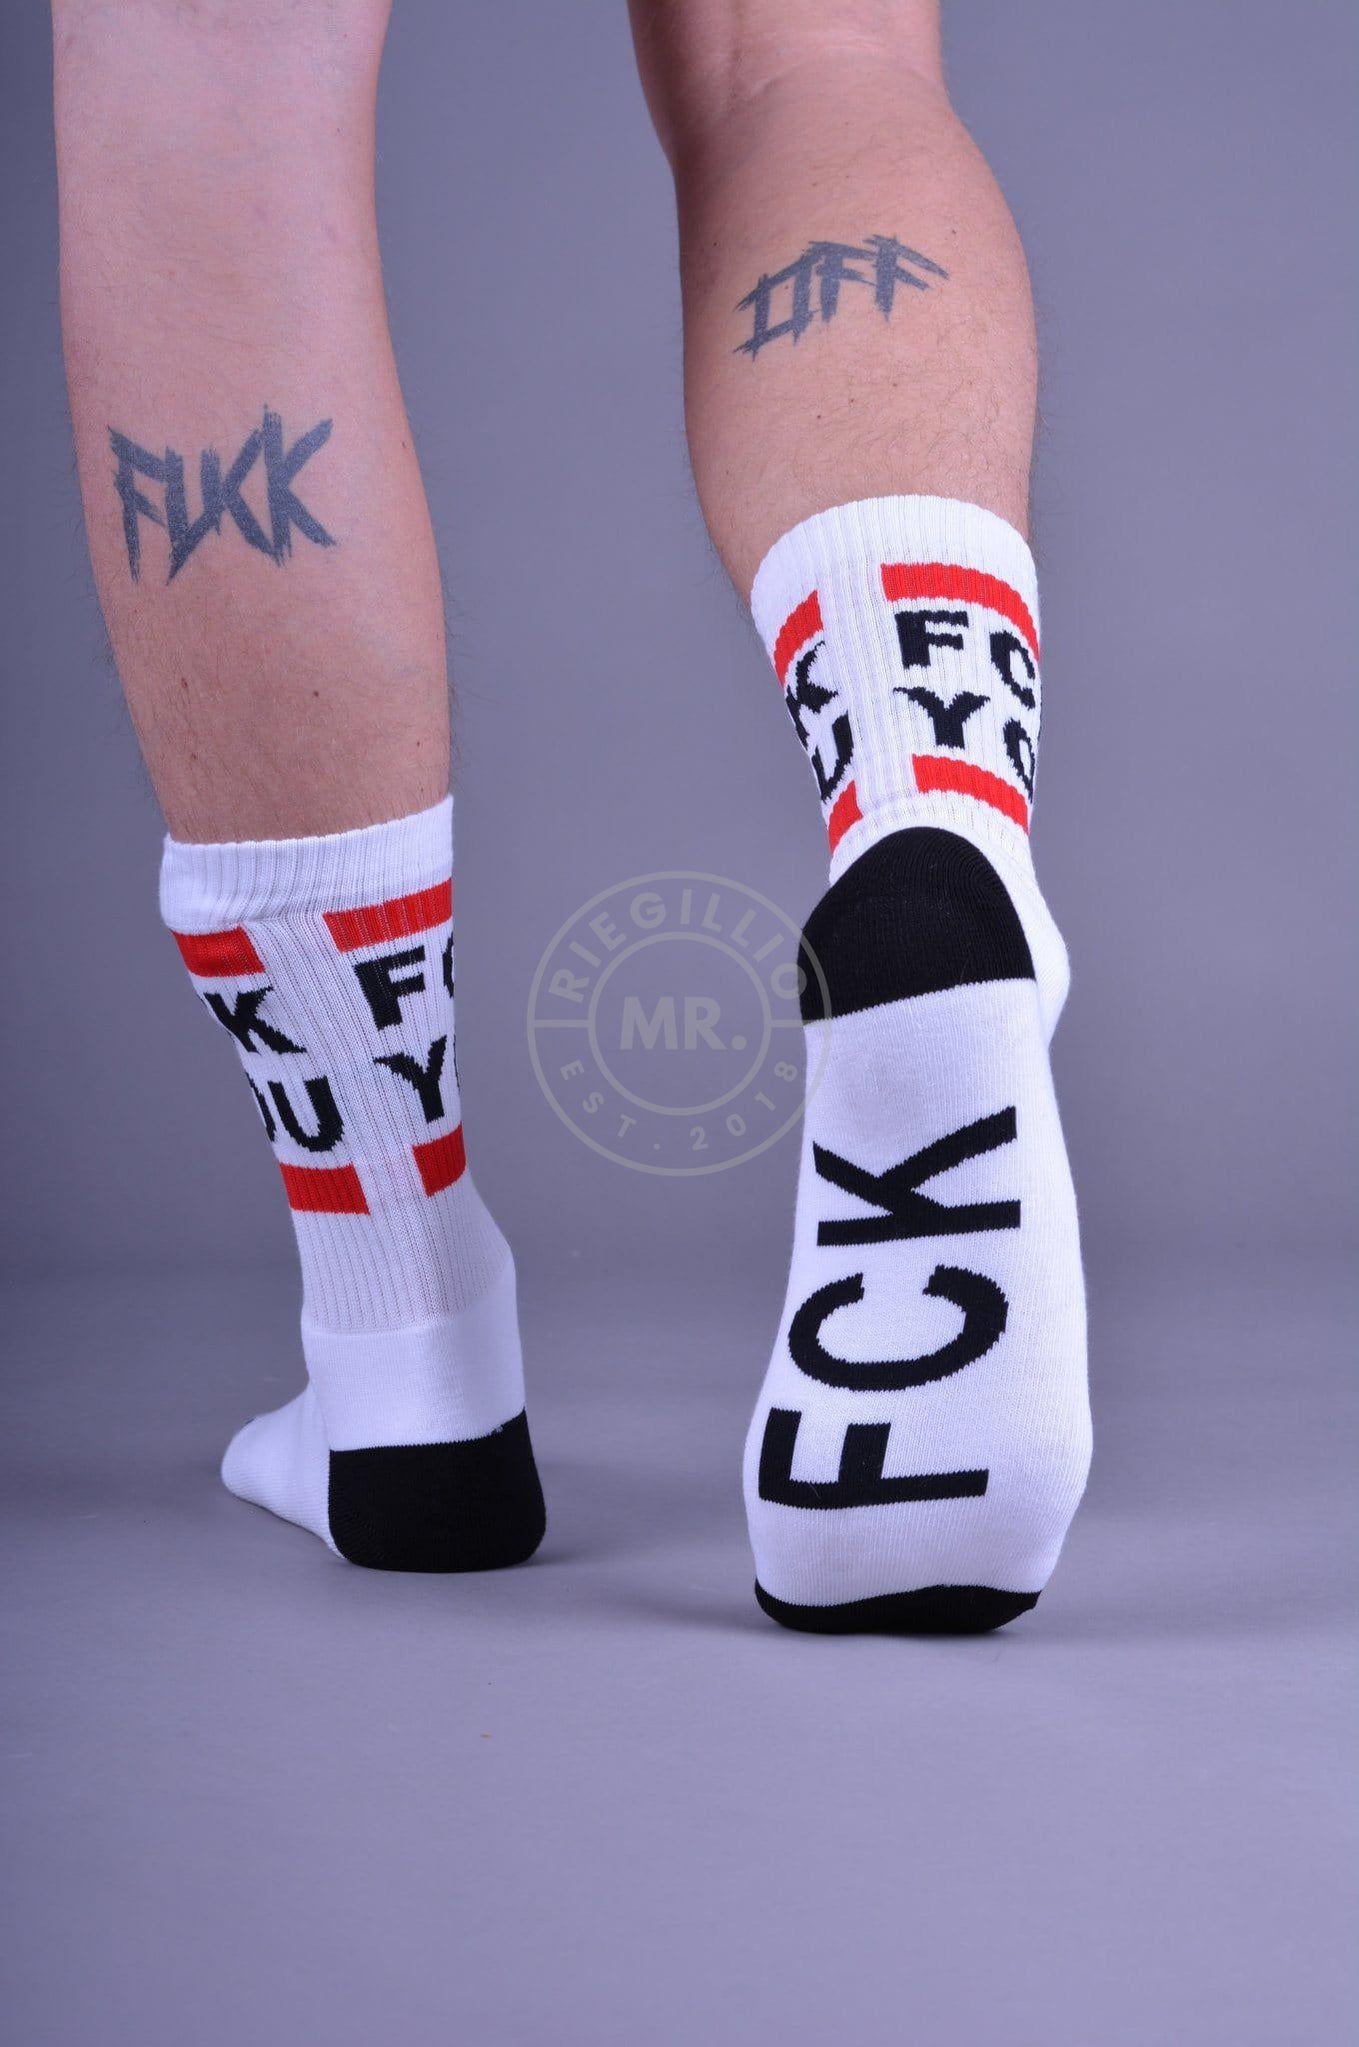 Sk8erboy SNIFF ME Socks at MR. Riegillio